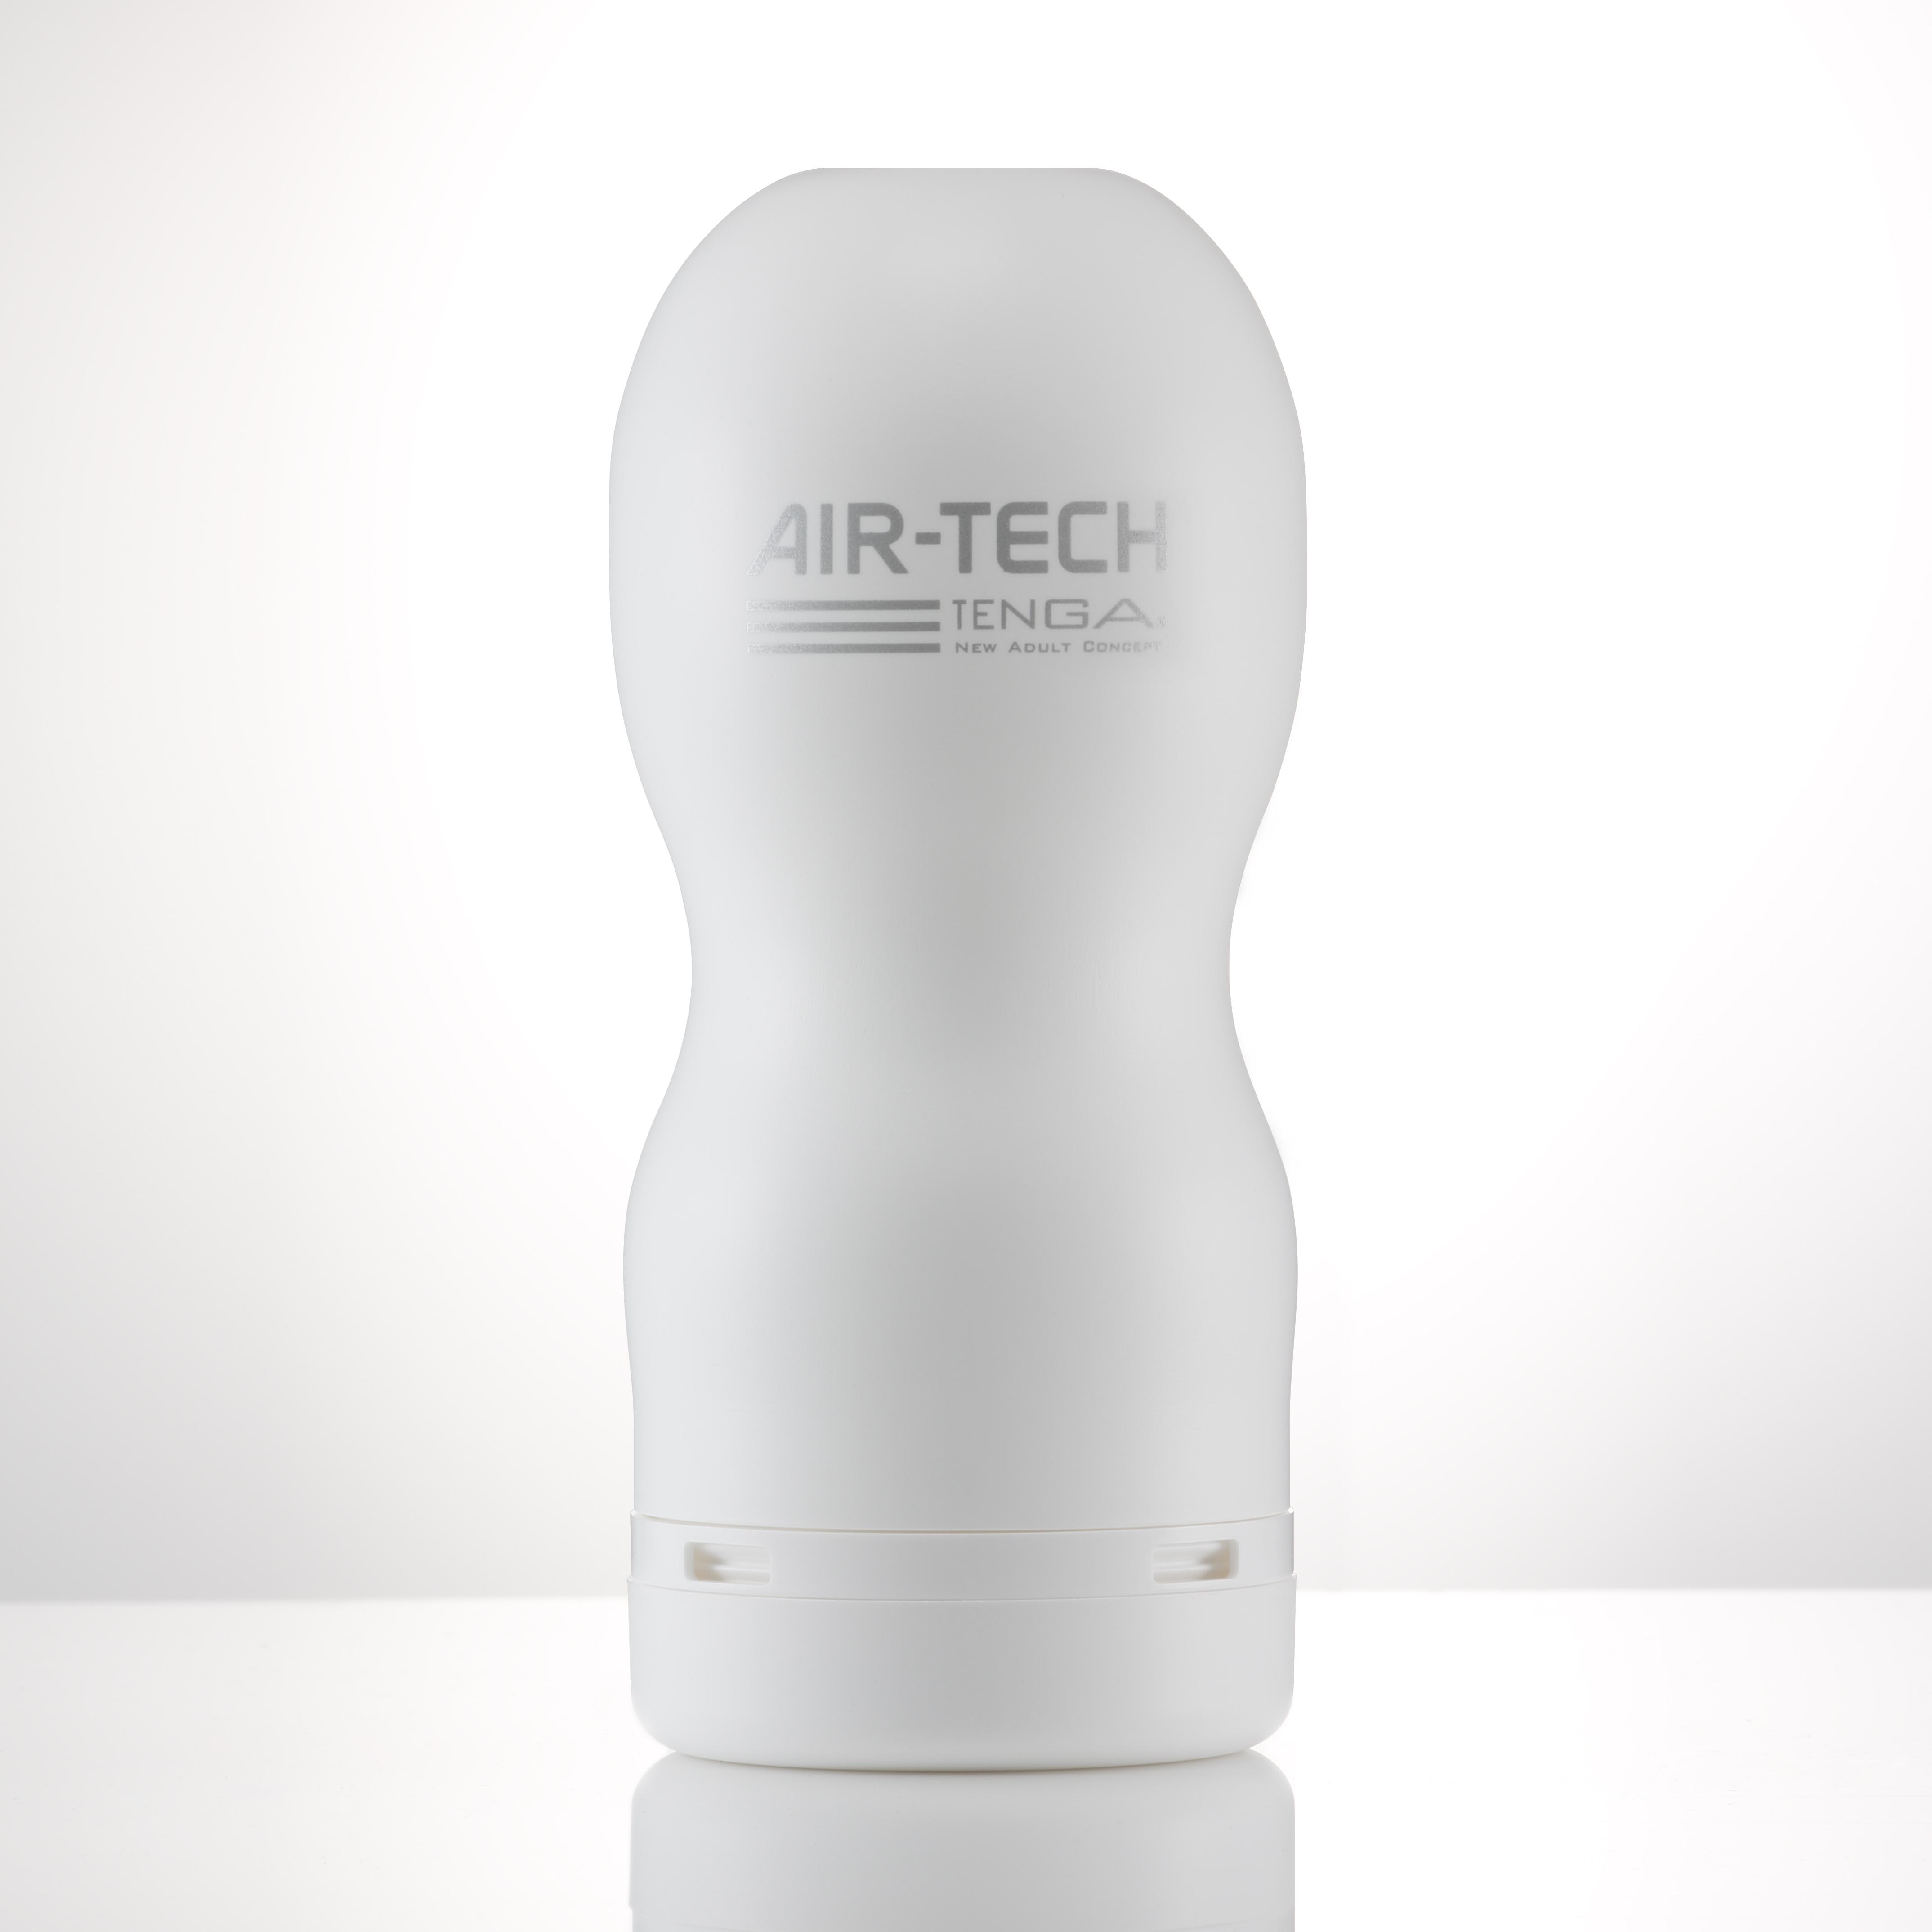 Tenga - Air-Tech Reusable Vacuum Cup Gentle Masturbátor